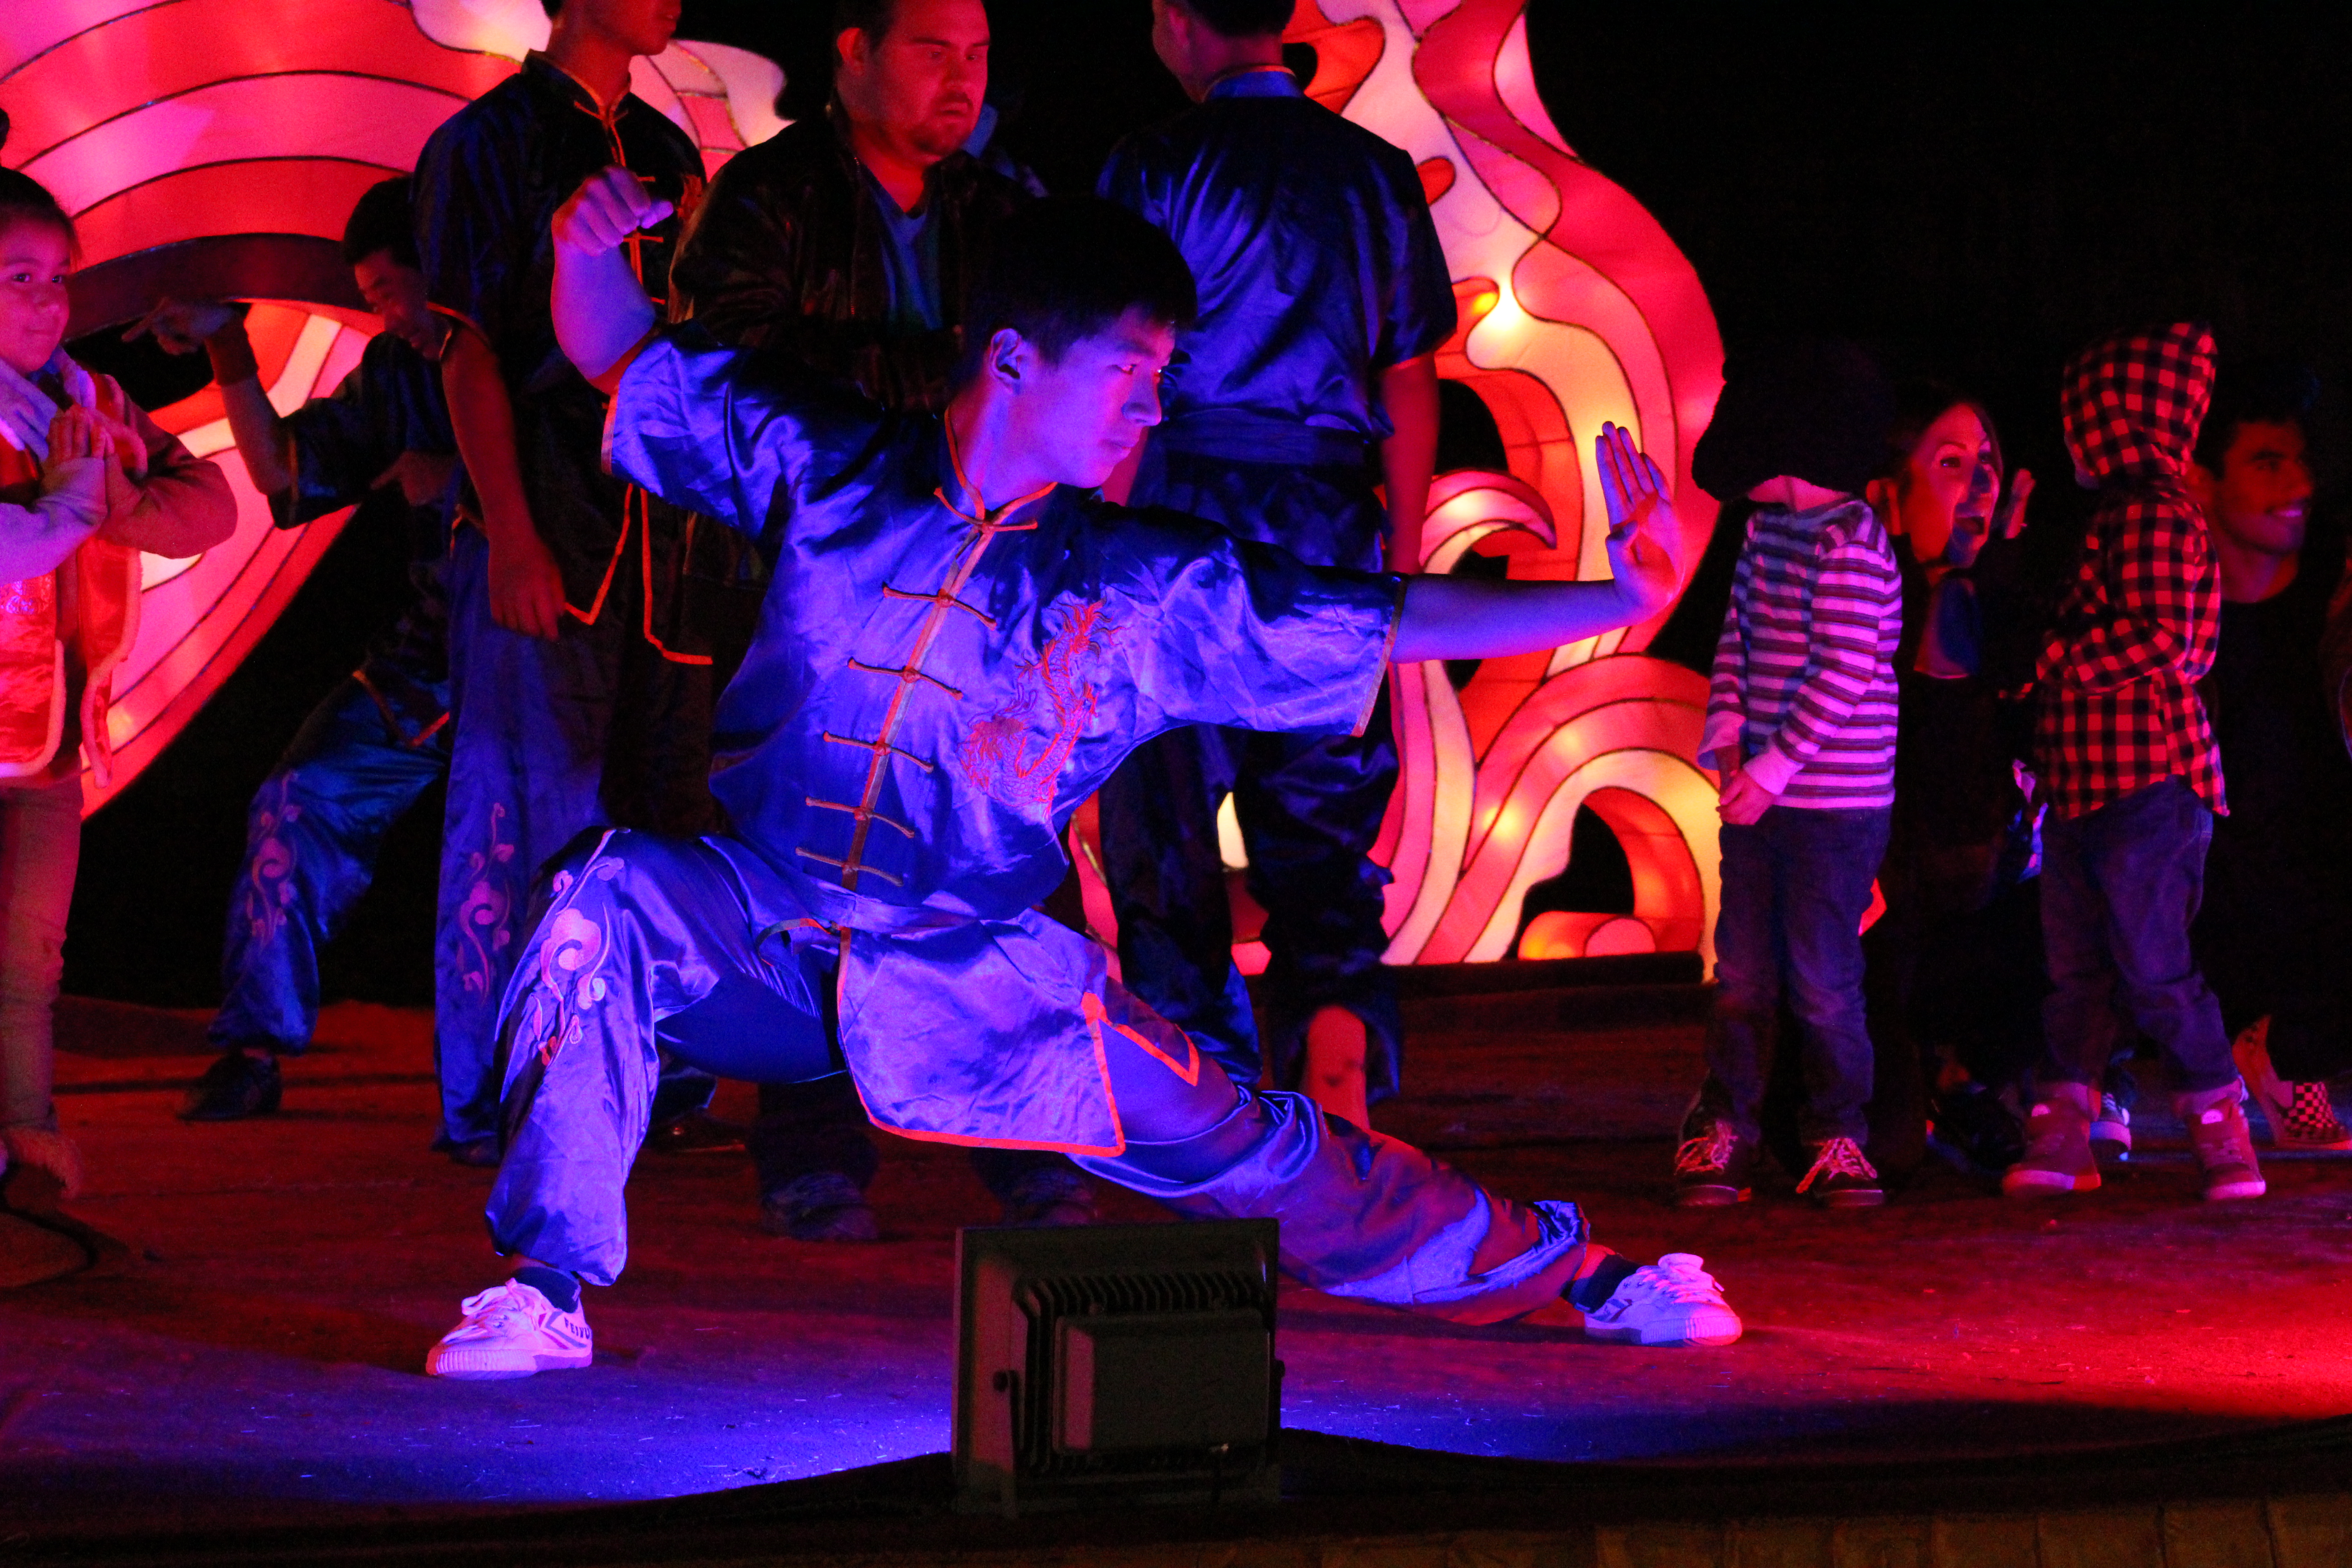 The Chinese Lantern Festival in Pomona